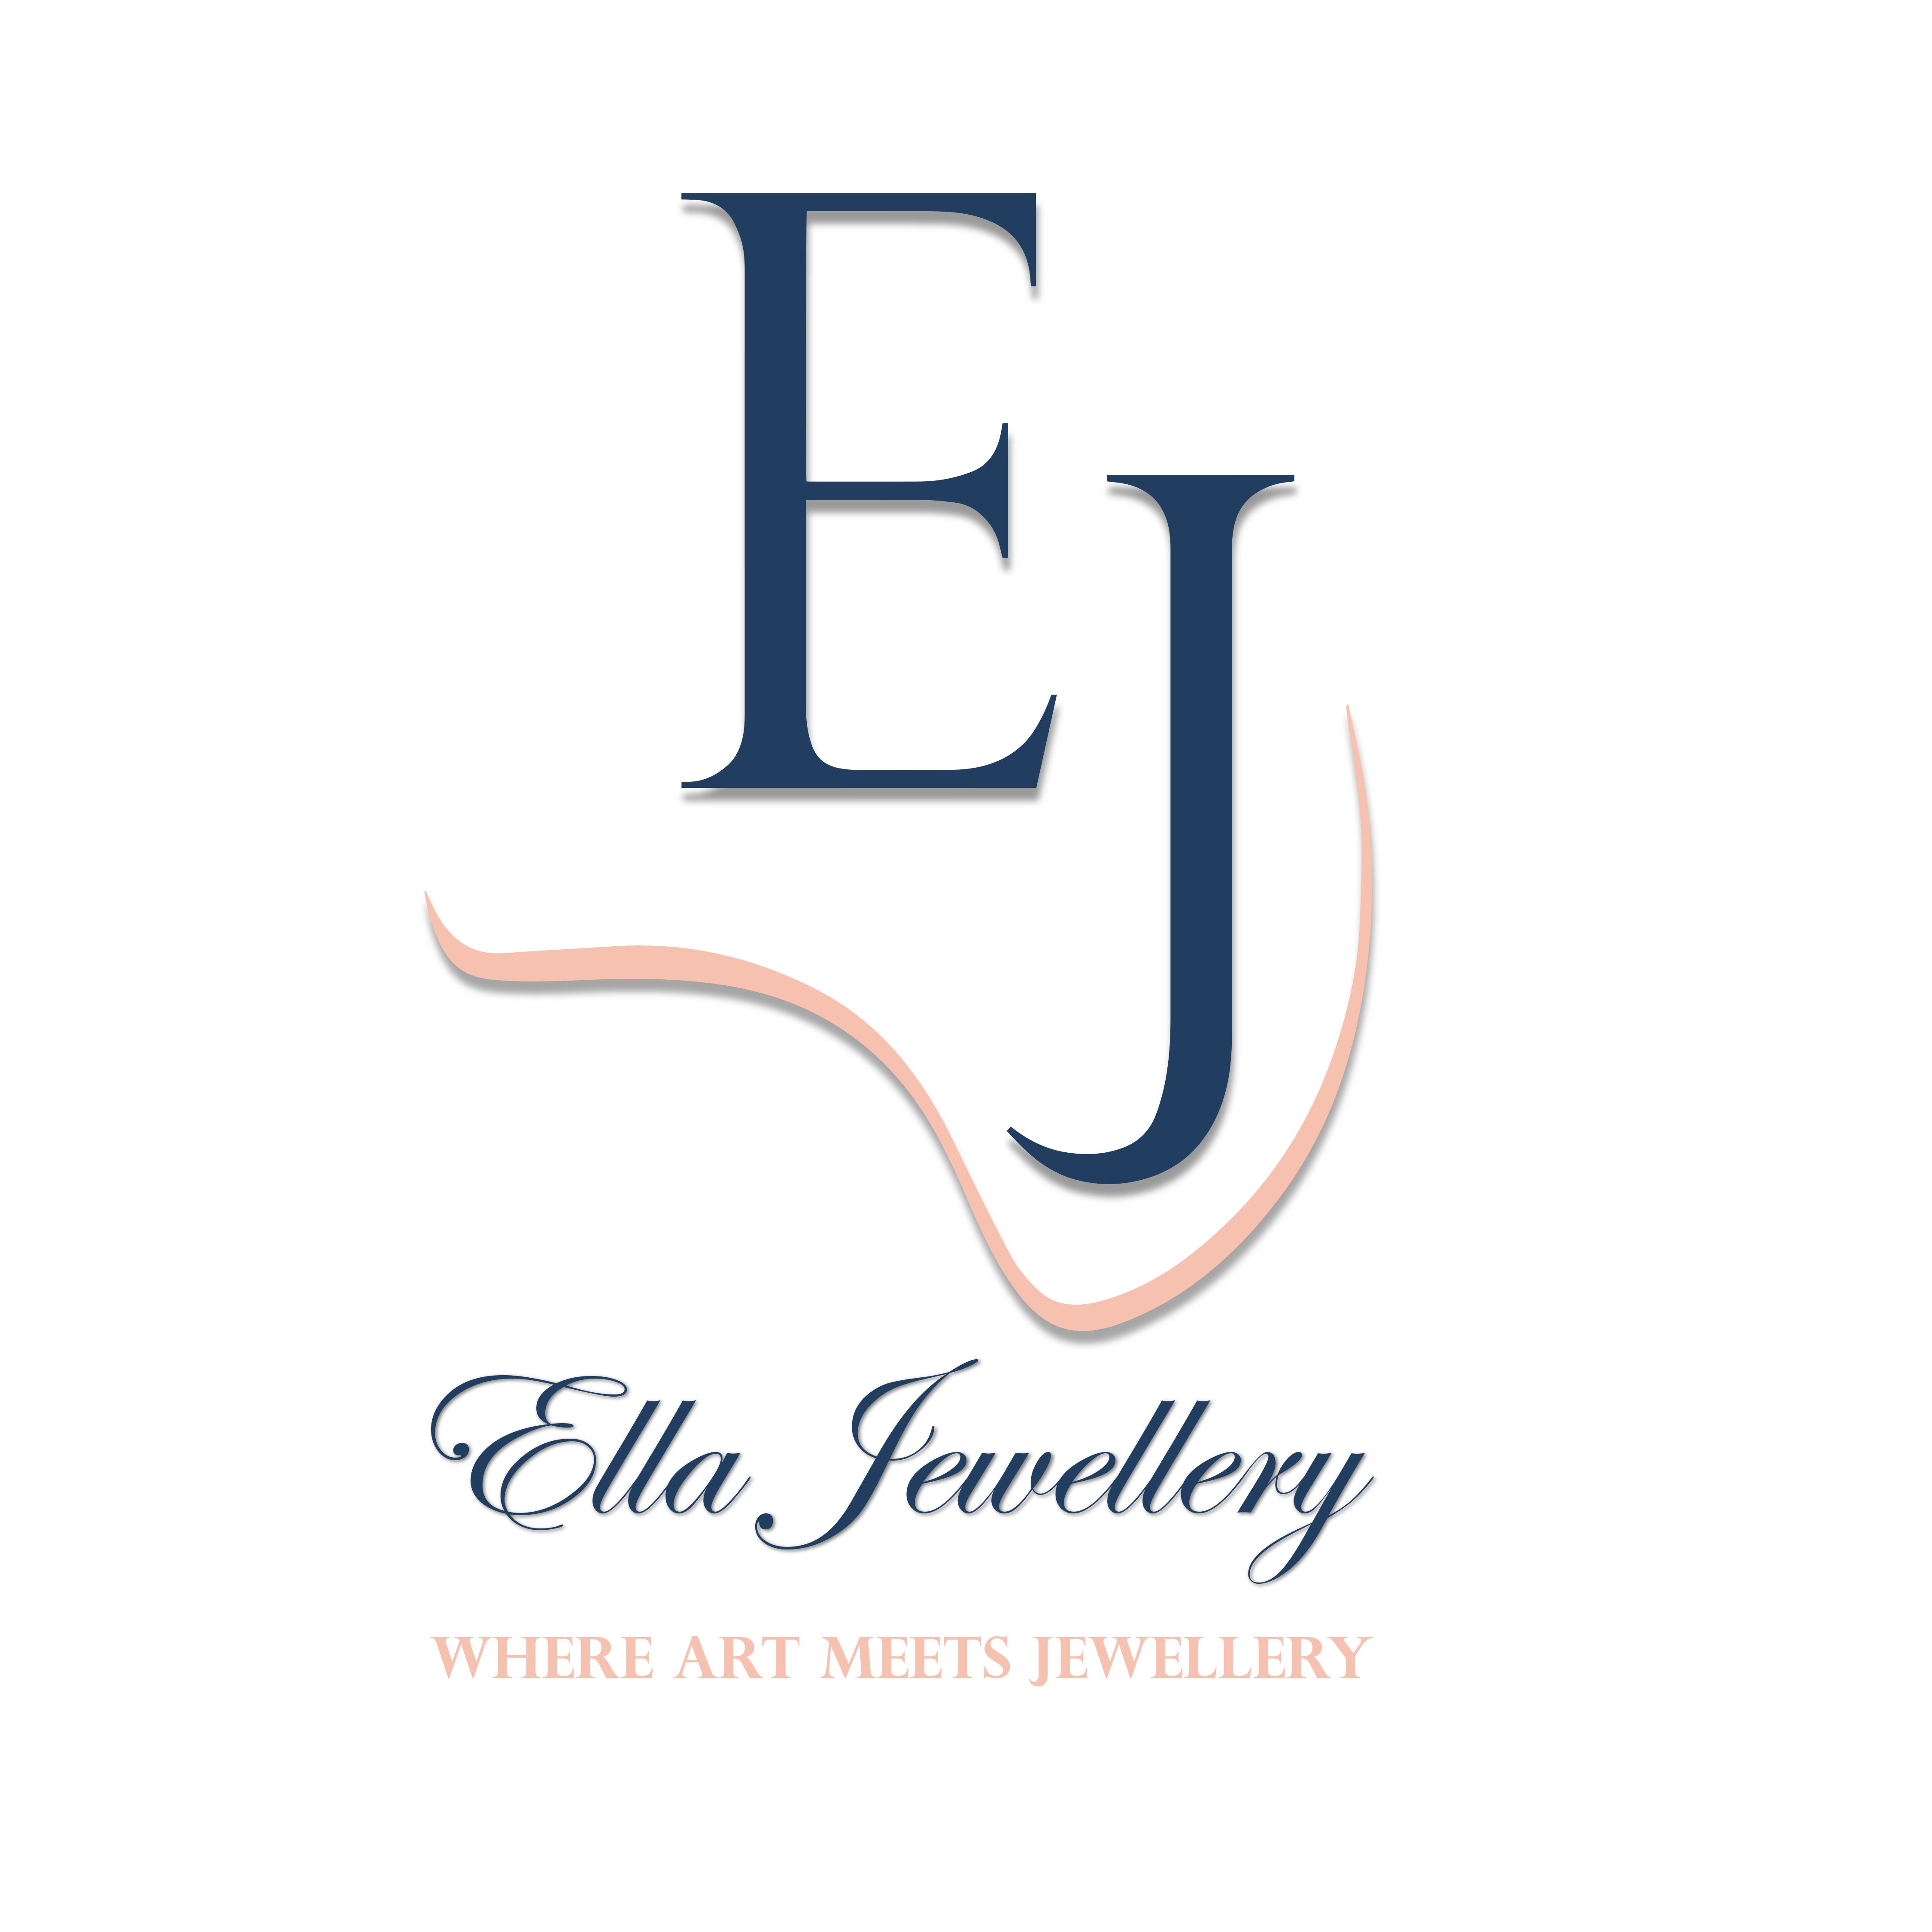 Ella Art Gallery & Jewellery W.LL.